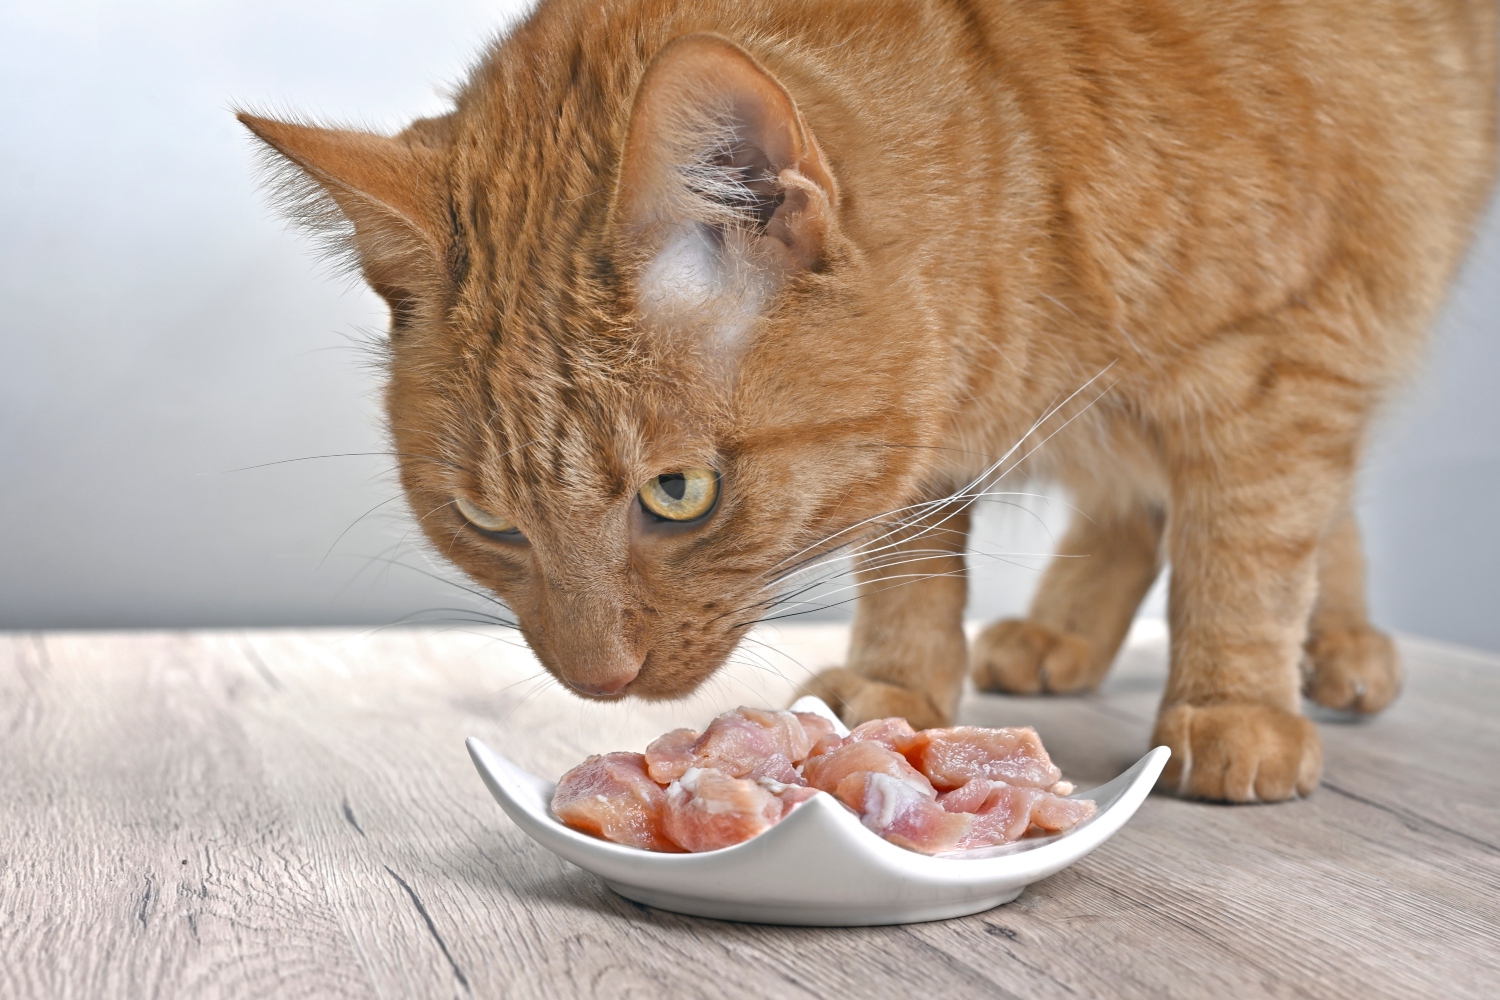 ginger cat eating food